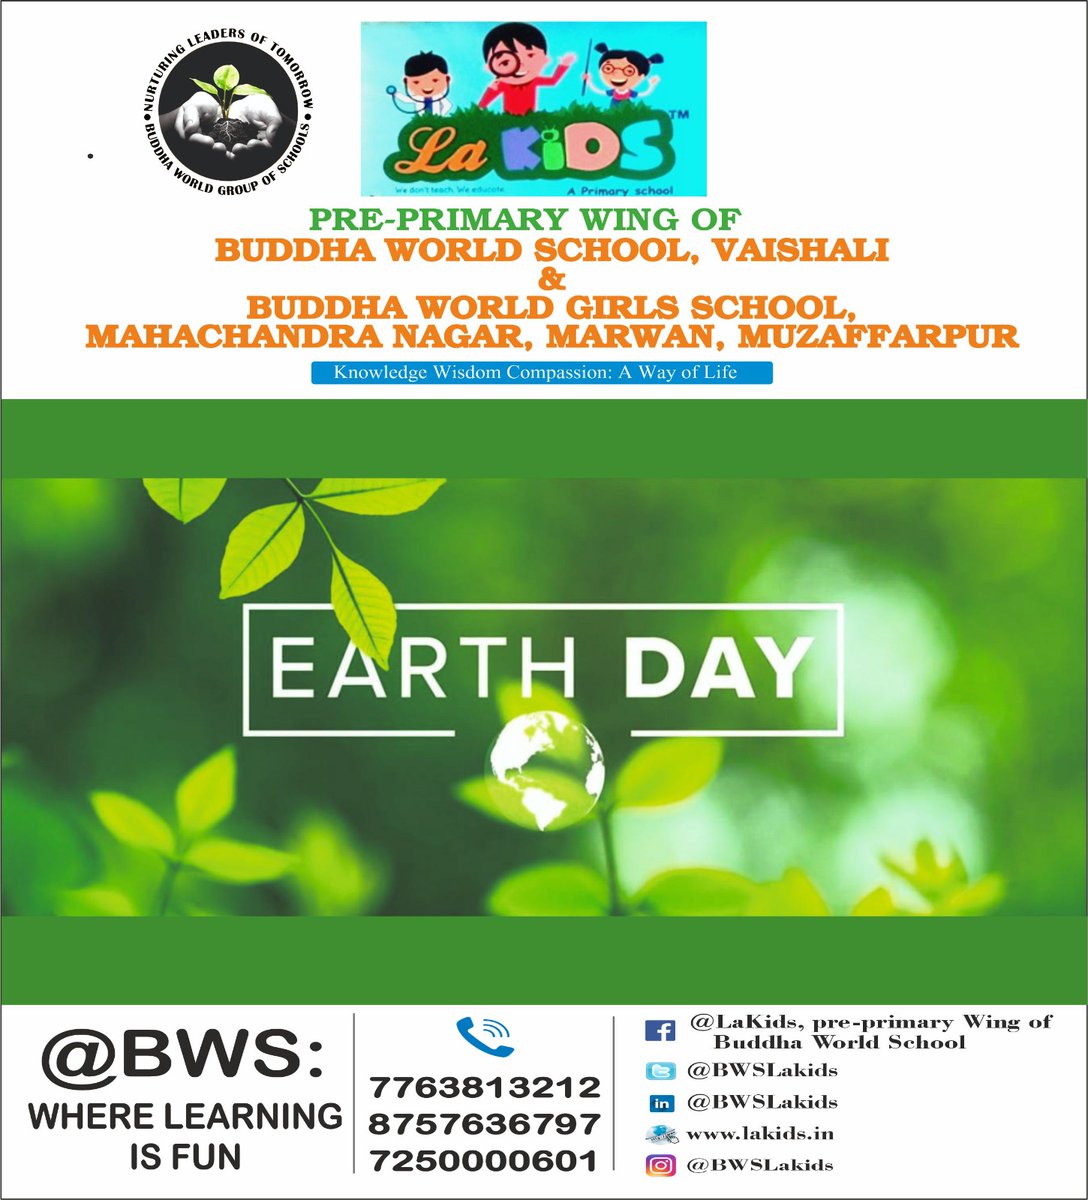 Happy Earth Day🌲🌳
#EarthDay2024 #earthday #EarthDay24 #earth #green #cleanearth #greenearth #bws #wherelearningisfun @sarikamalhotra2 @Krish_Vaishali